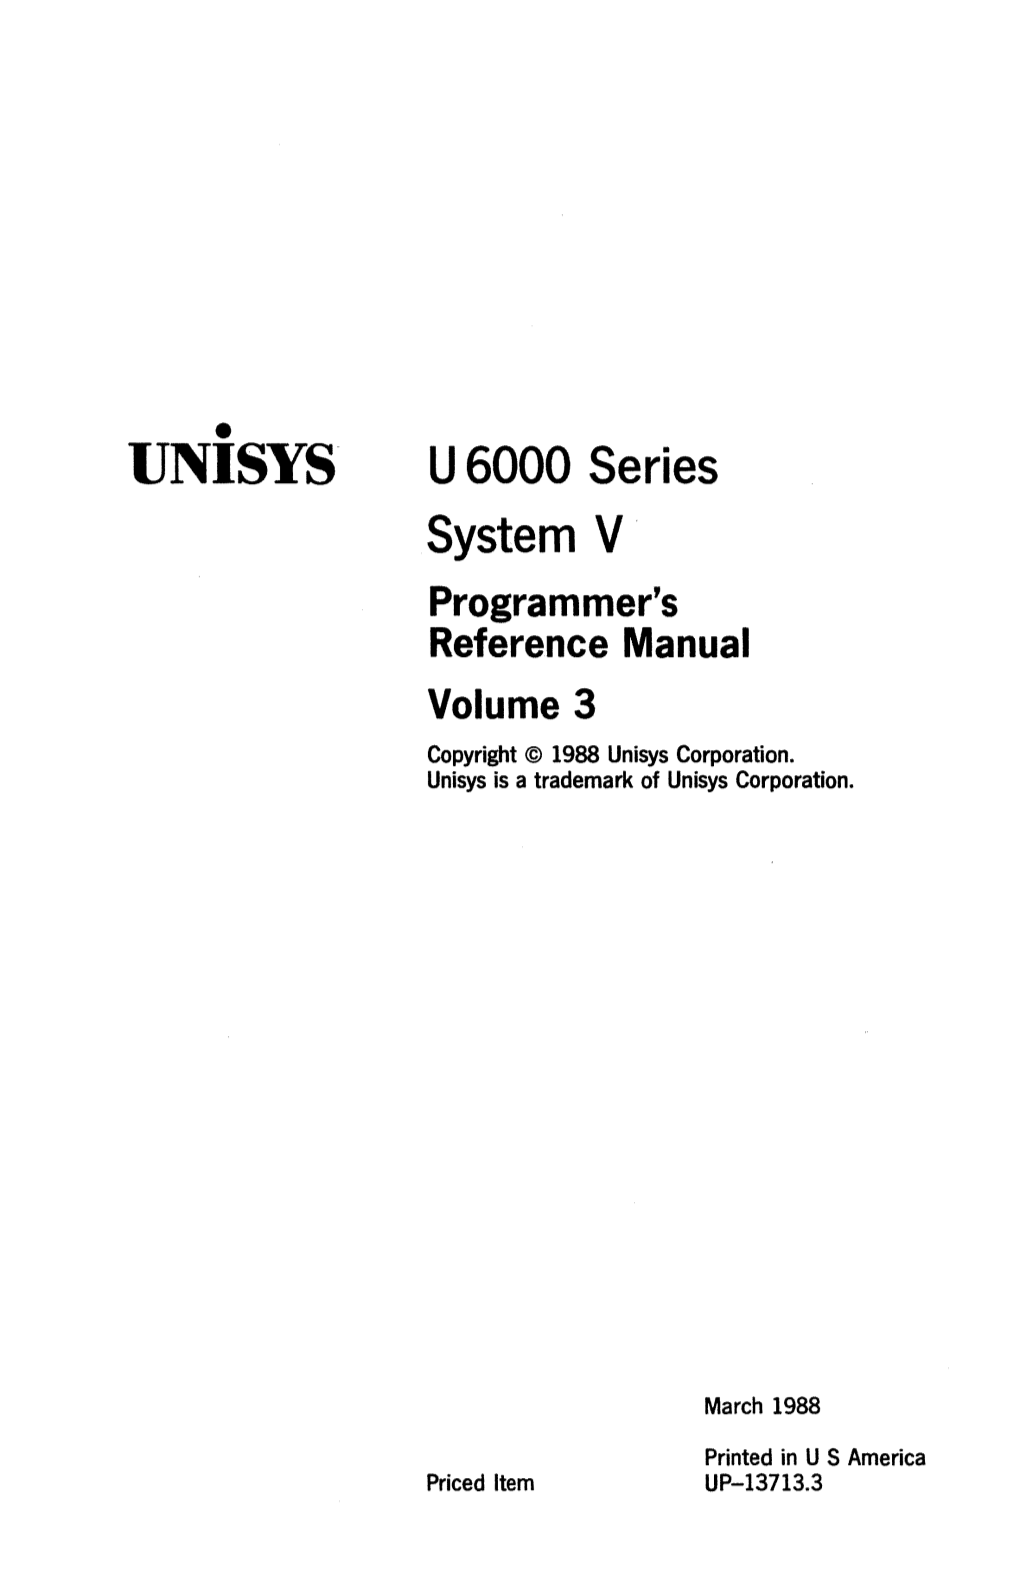 UNISYS U 6000 Series System V Programmer's Reference Manual Volume 3 Copyright © 1988 Unisys Corporation